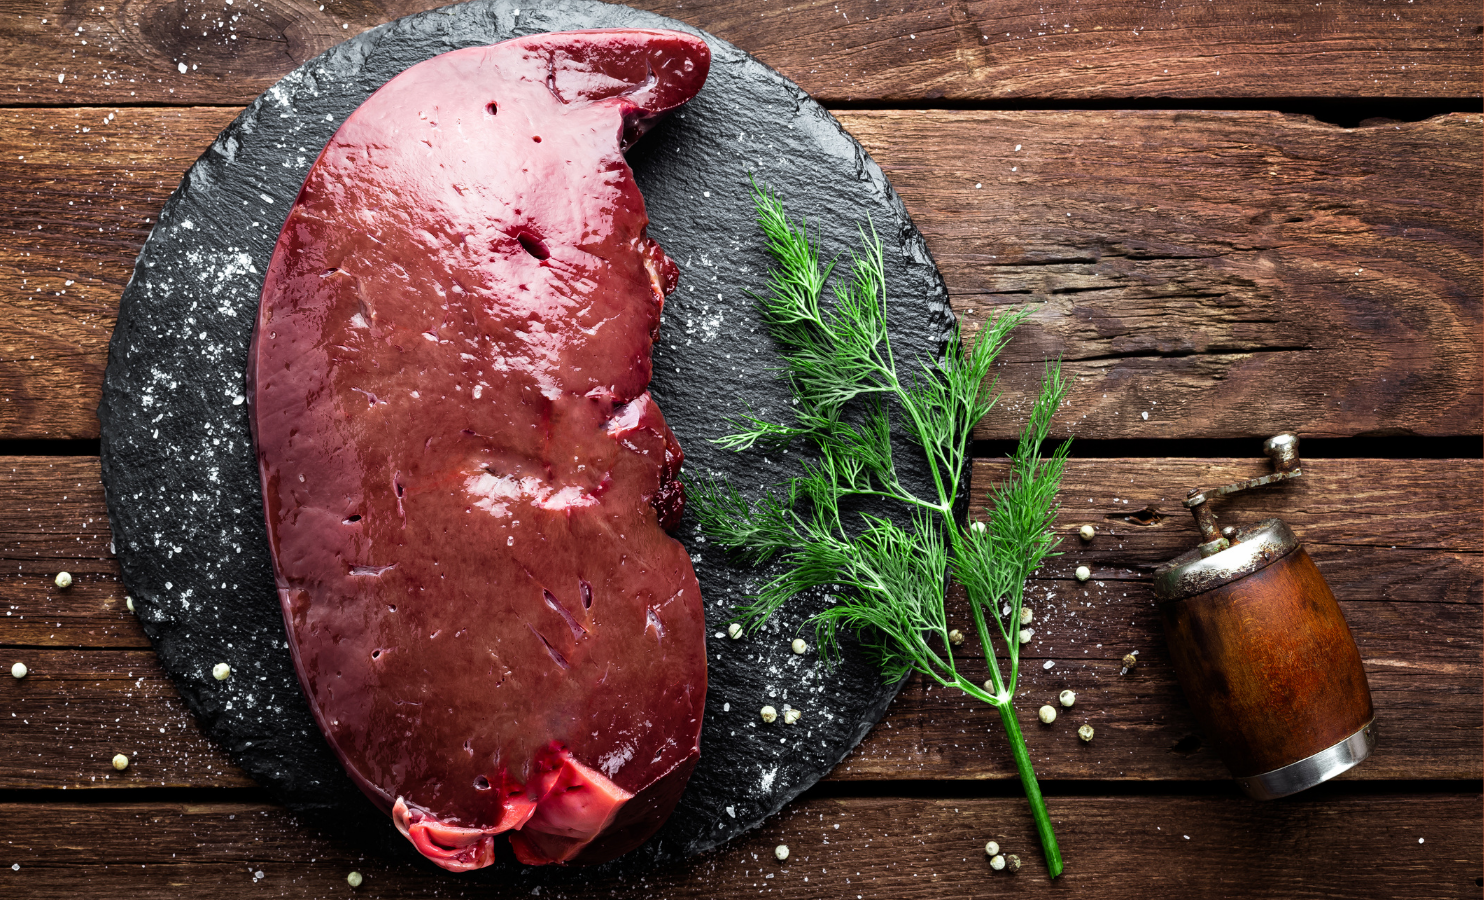 Beef Liver and Benefits | Nature's Top Superfood | Dr. Robert Kiltz